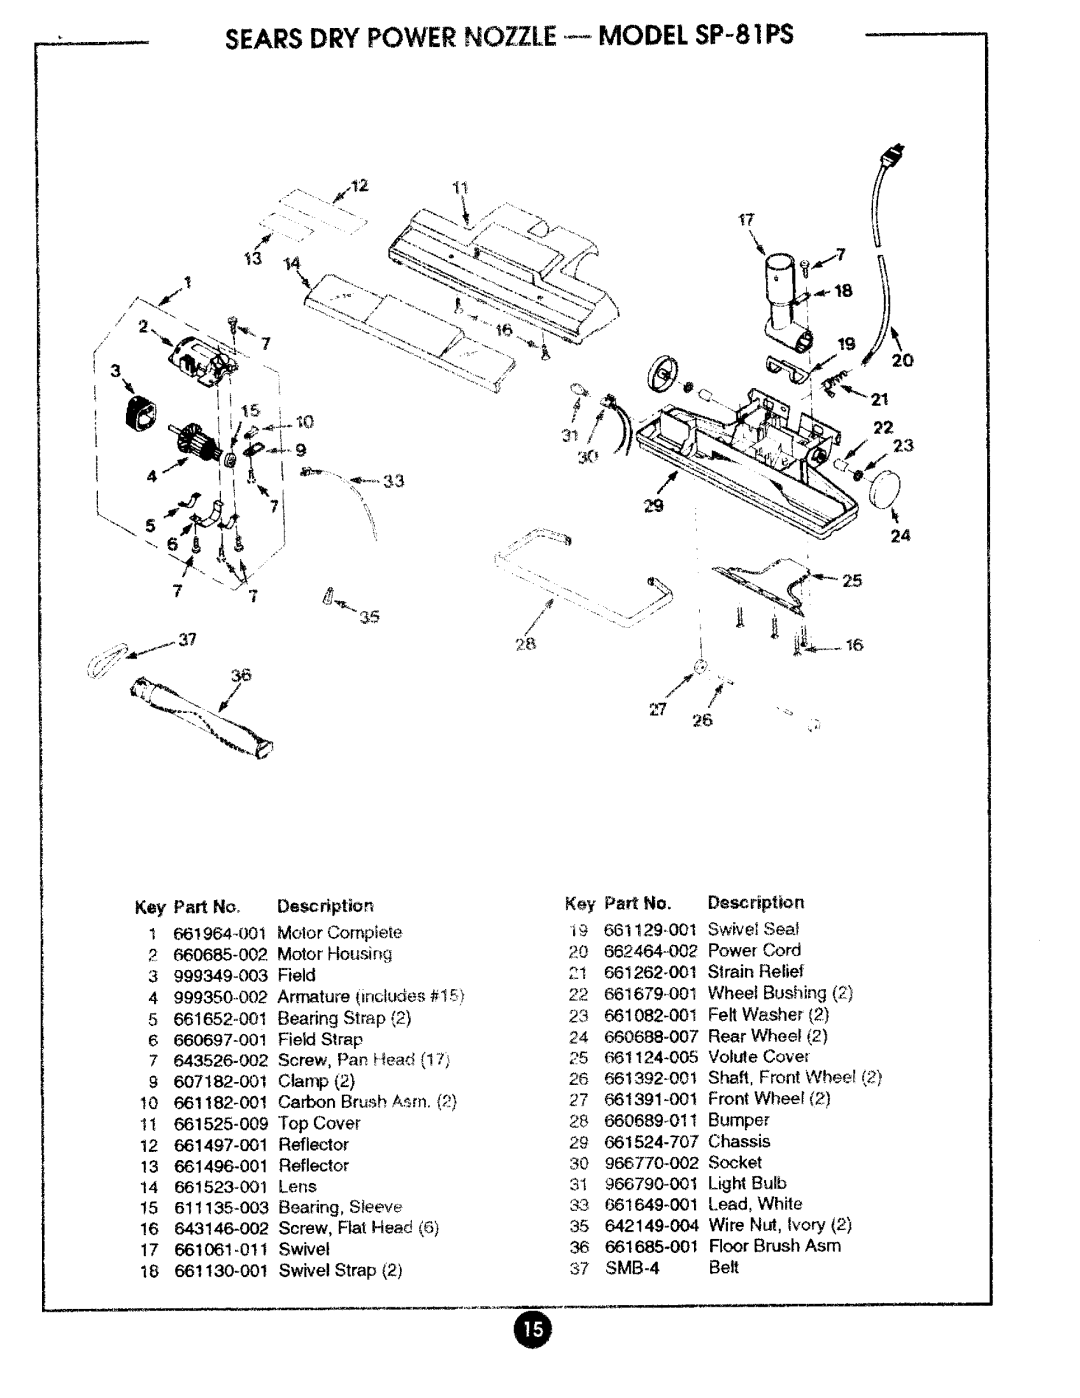 Kenmore 175.869039 manual SEARSDRY POWER NOZZLE--MODEL SP-8 I PS, Description, 661182-001 